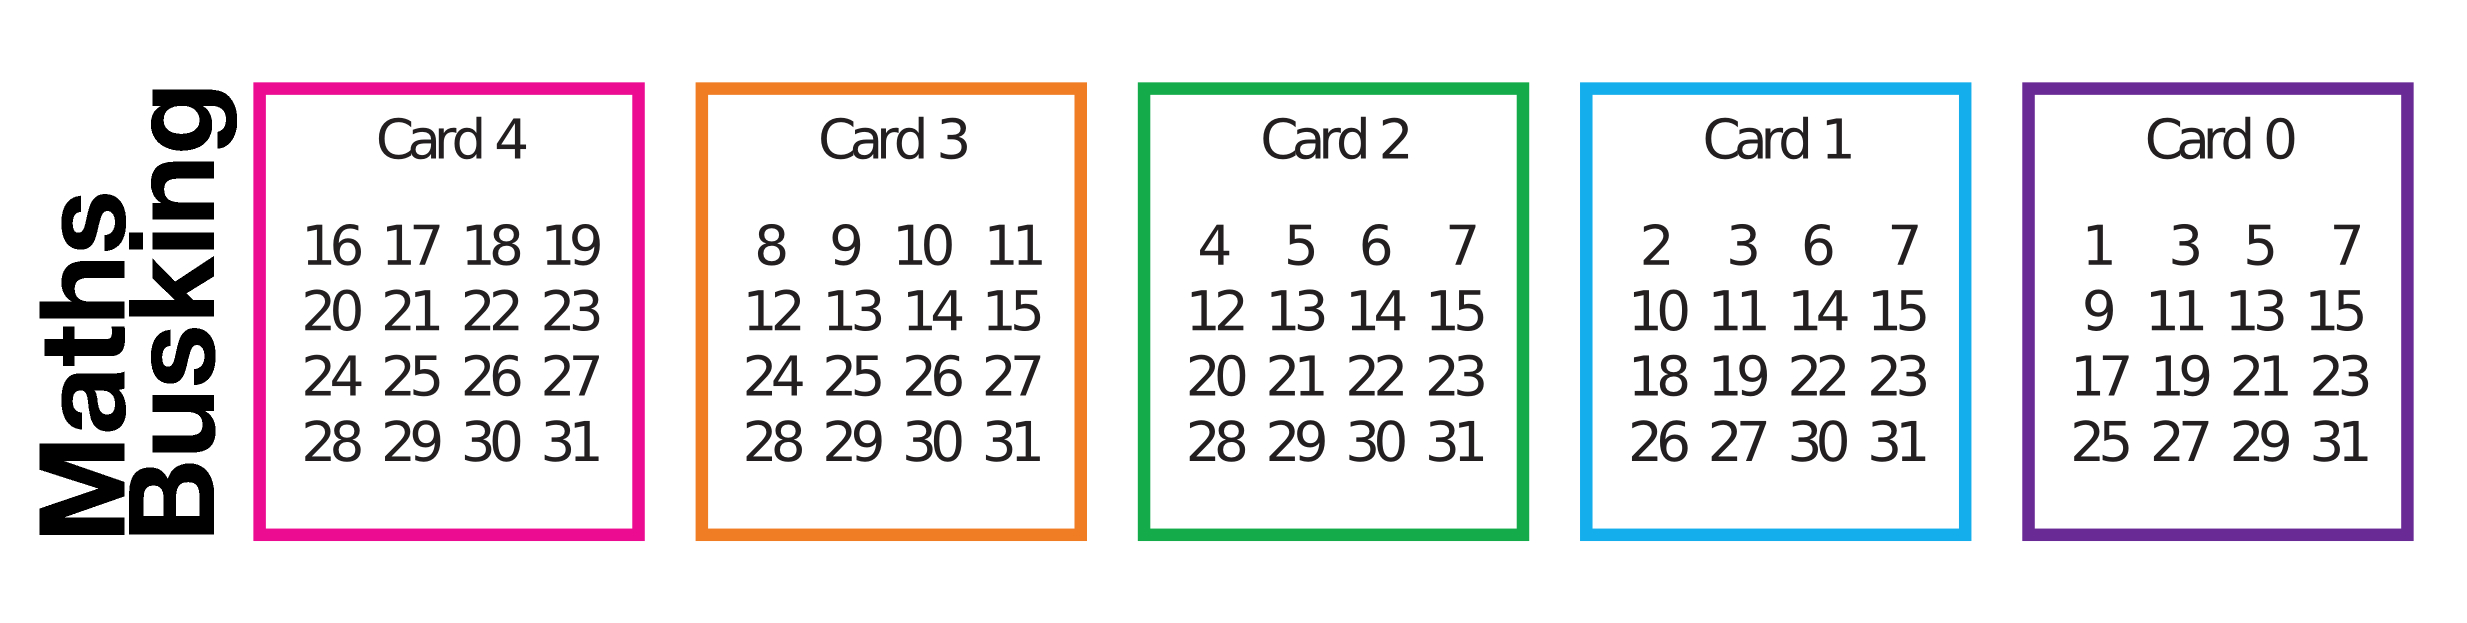 27 Card Trick Chart